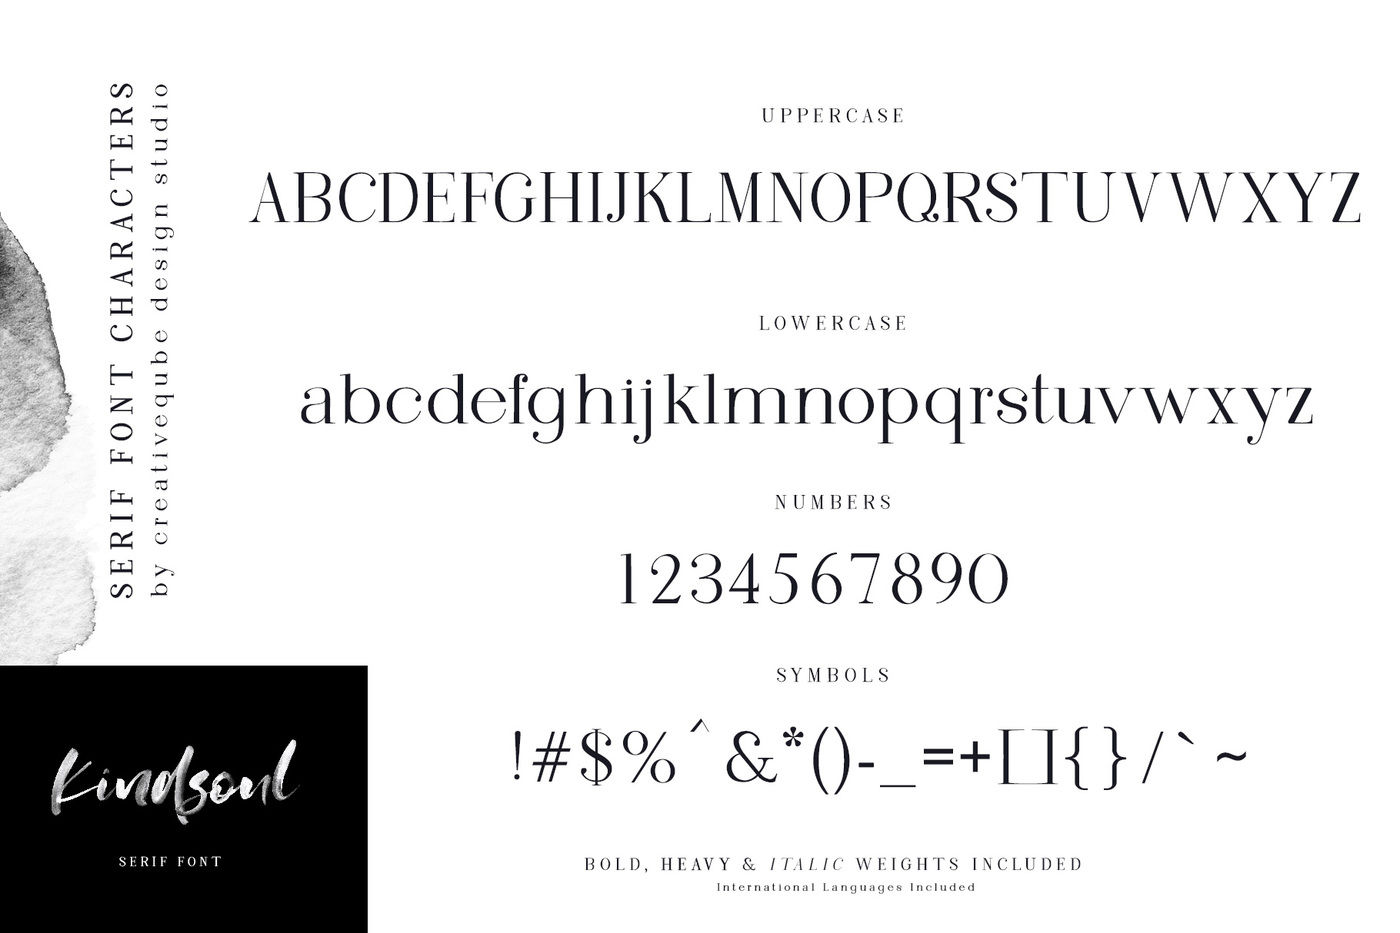 Kindsoul Svg Script Serif Font Duo By Creativeqube Design Thehungryjpeg Com